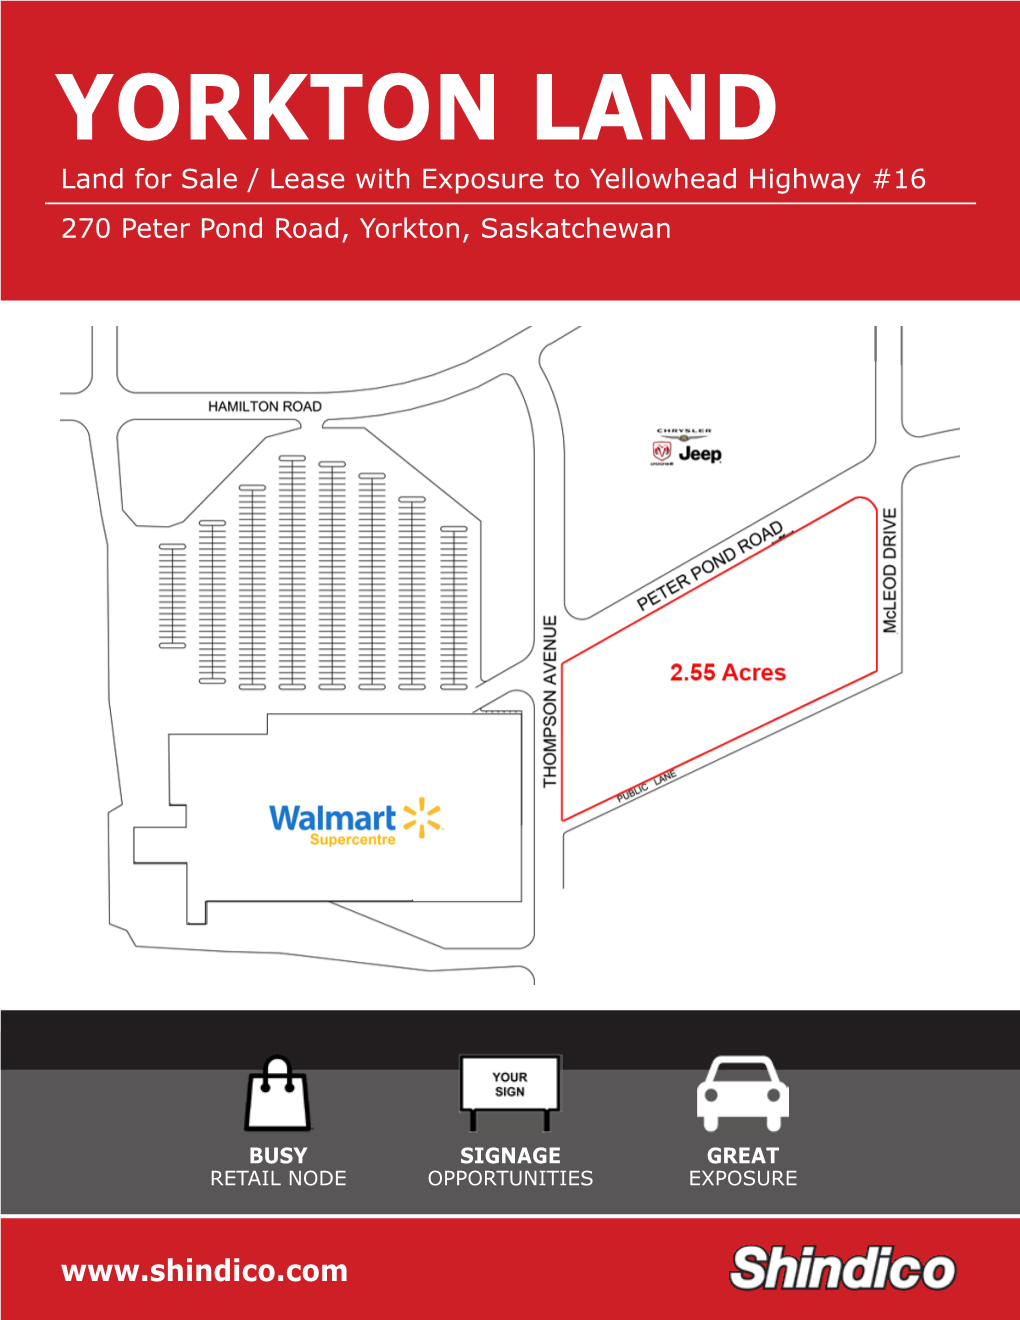 YORKTON LAND Land for Sale / Lease with Exposure to Yellowhead Highway #16 270 Peter Pond Road, Yorkton, Saskatchewan